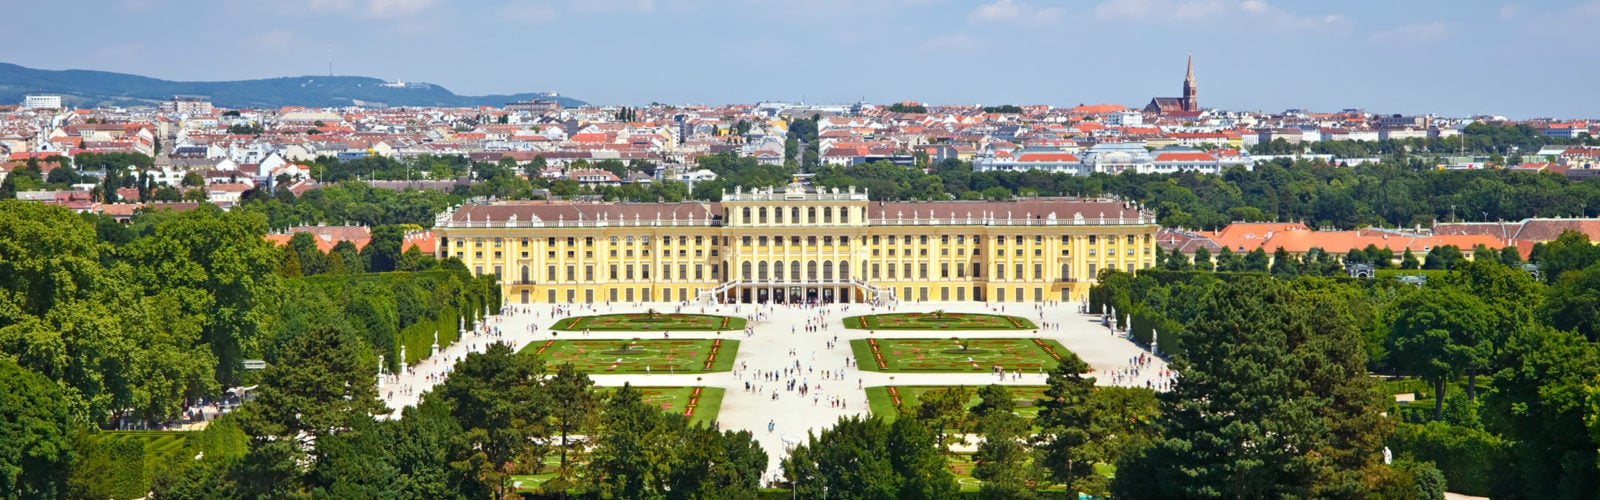 schonbrunn-palace-vienna-austria